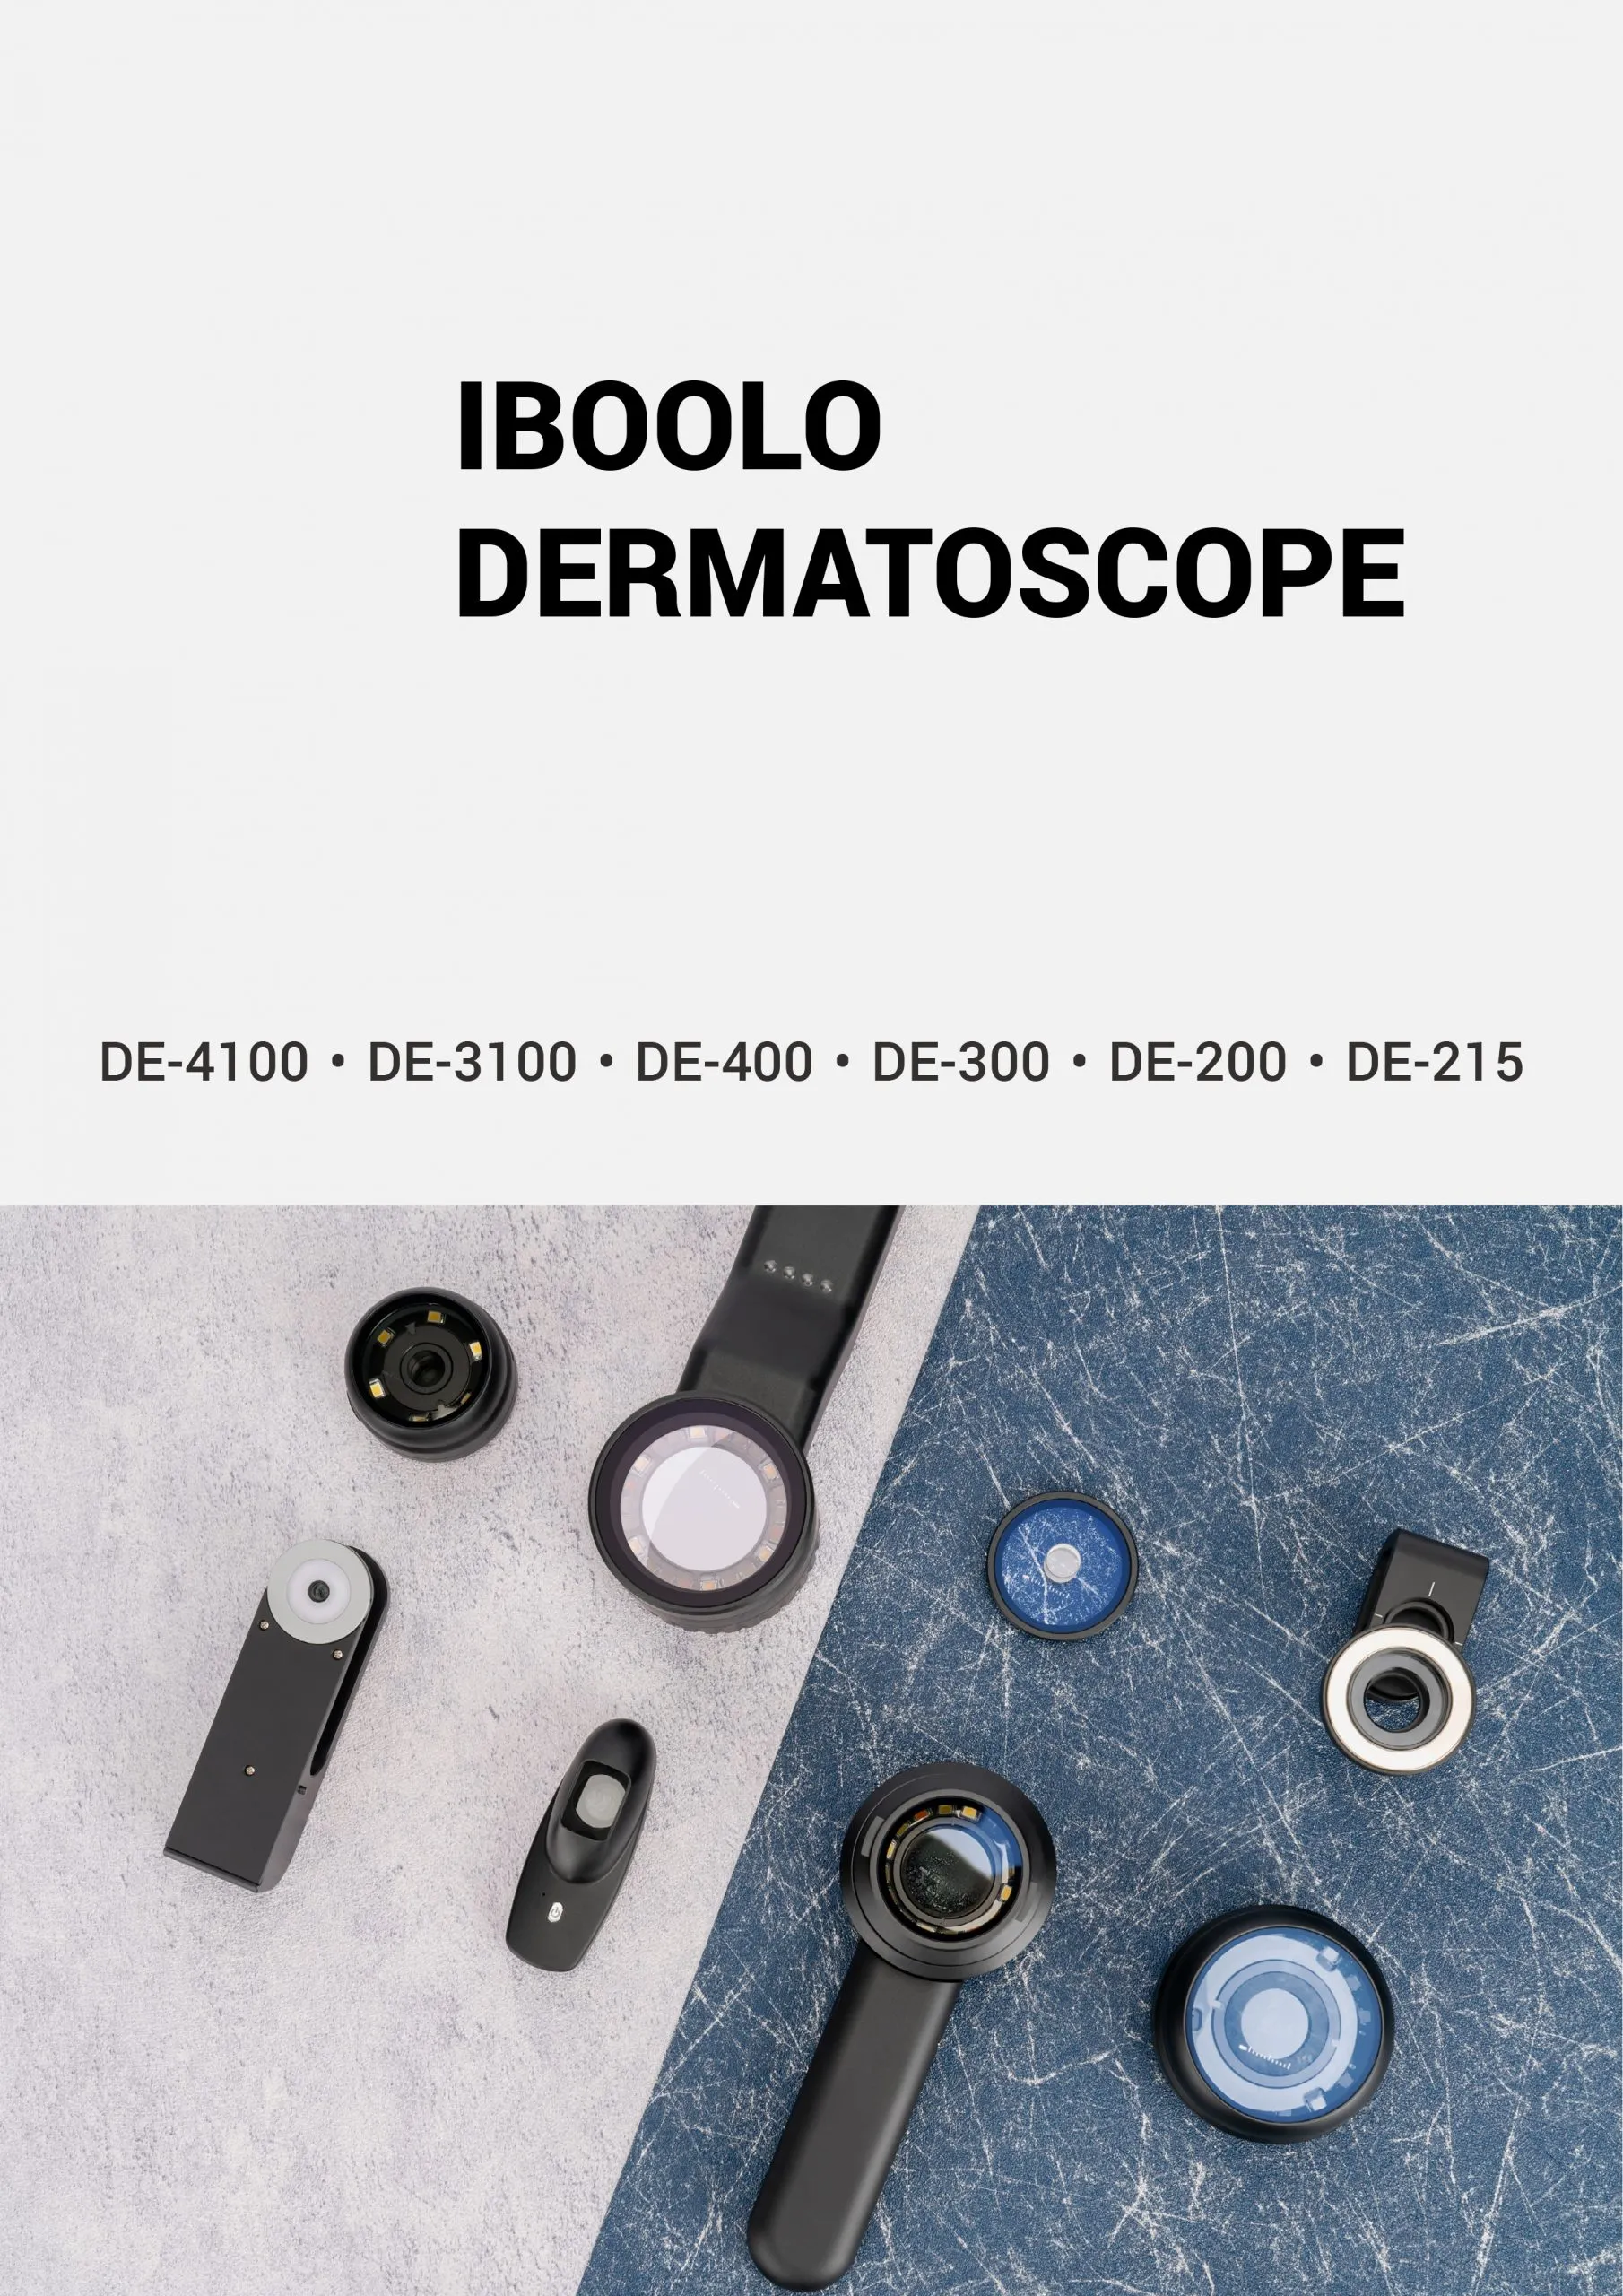 China smartphone best dermatoscope suppliers & wholesalers